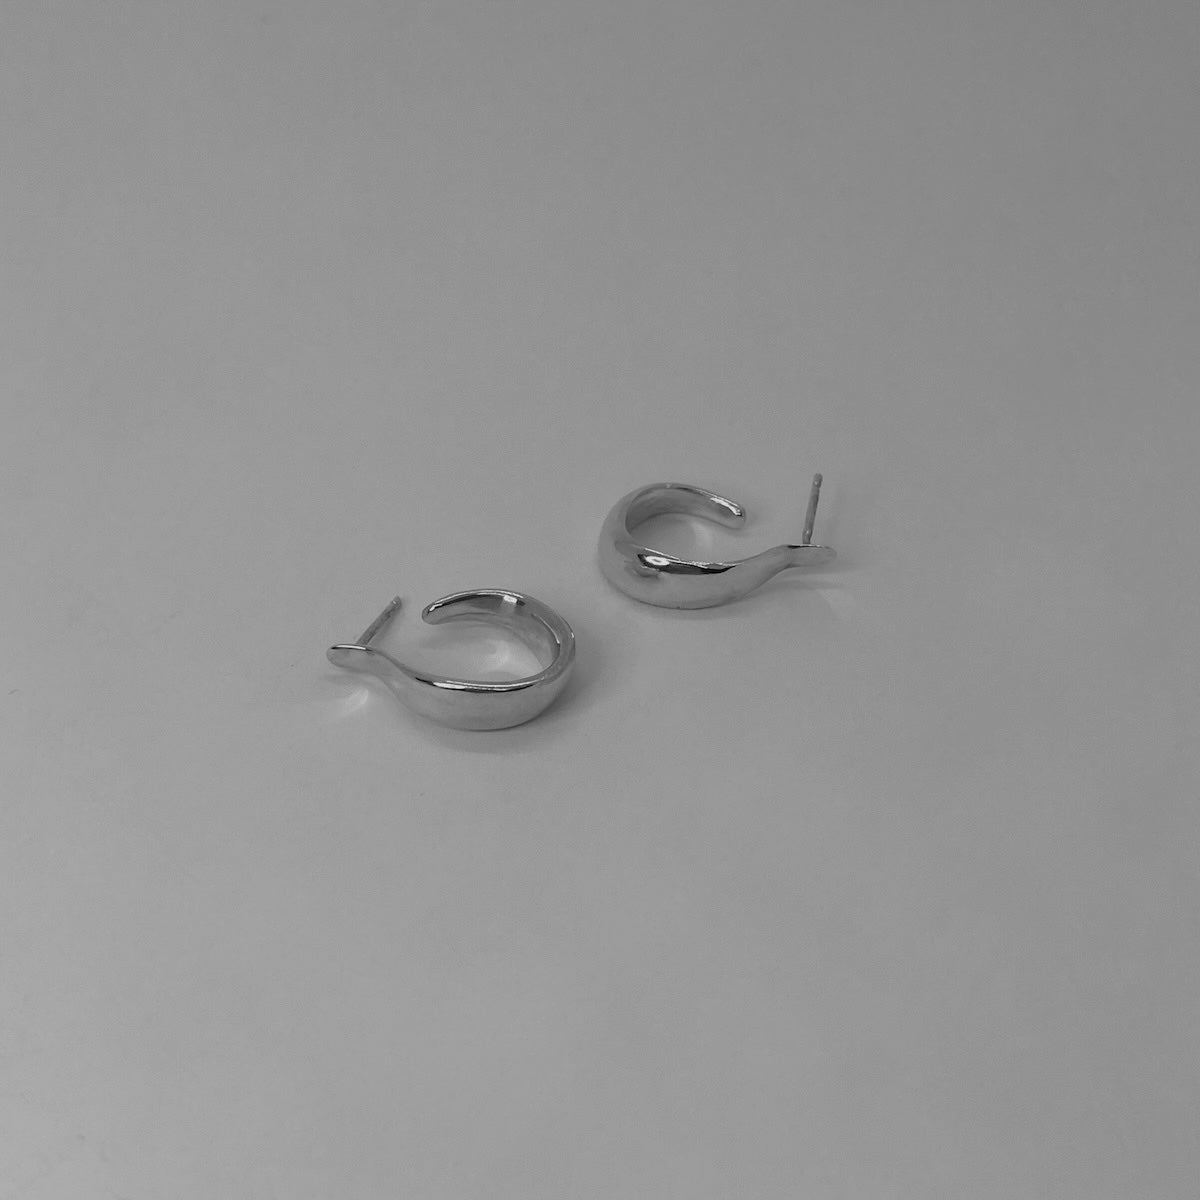 Handmade oval hoop earrings made from sterling silver 925